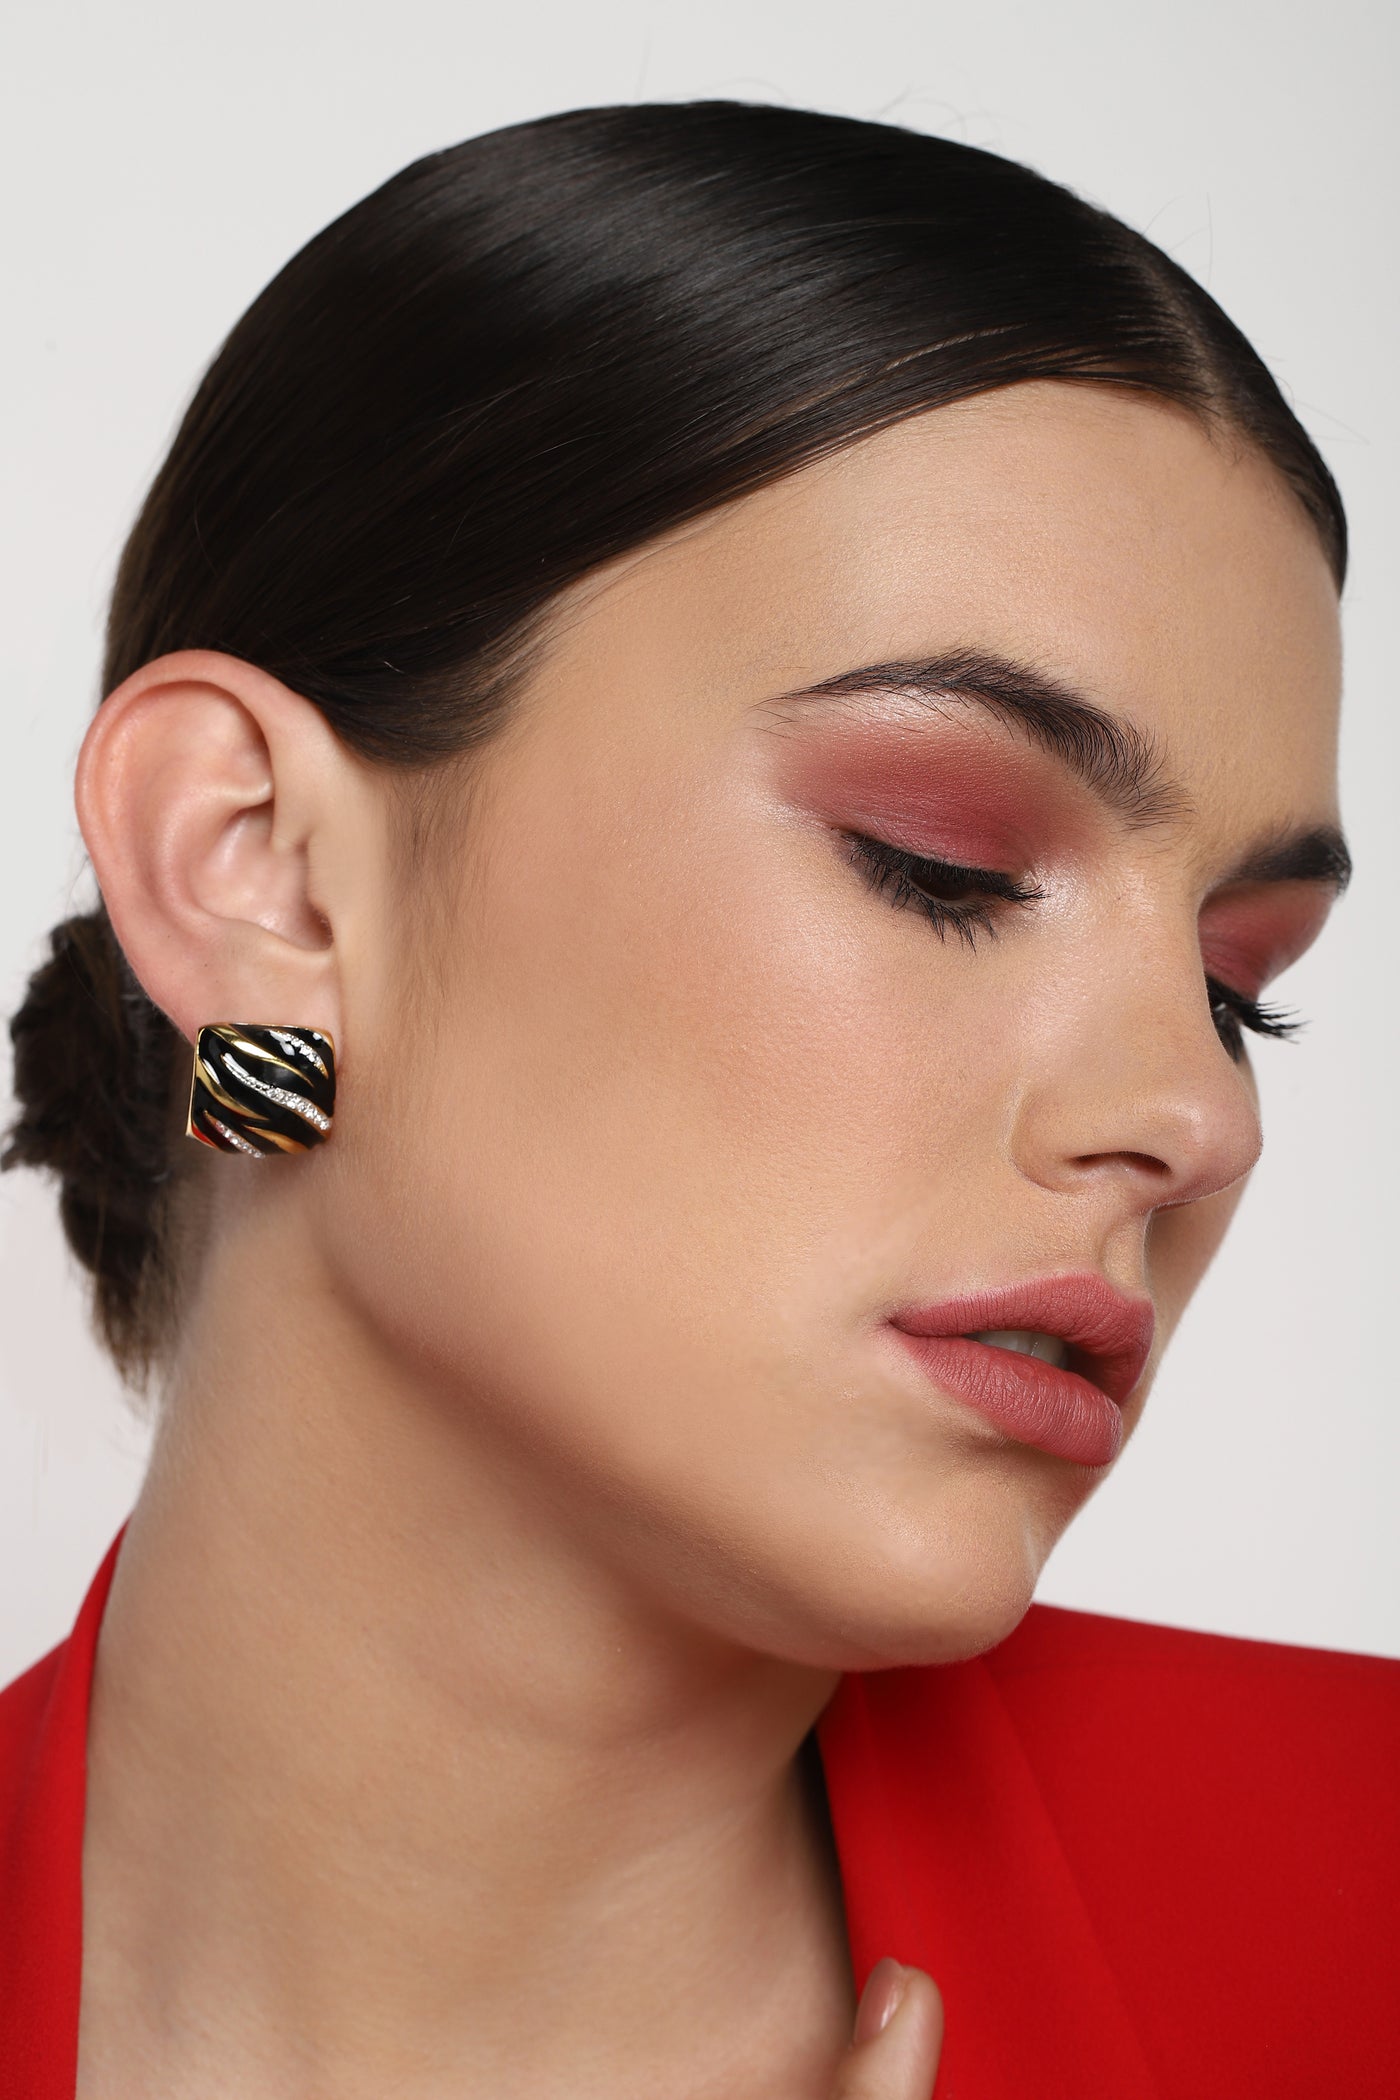 Estele Gold Plated Square modal Stud Earrings with Black Enamel for Women